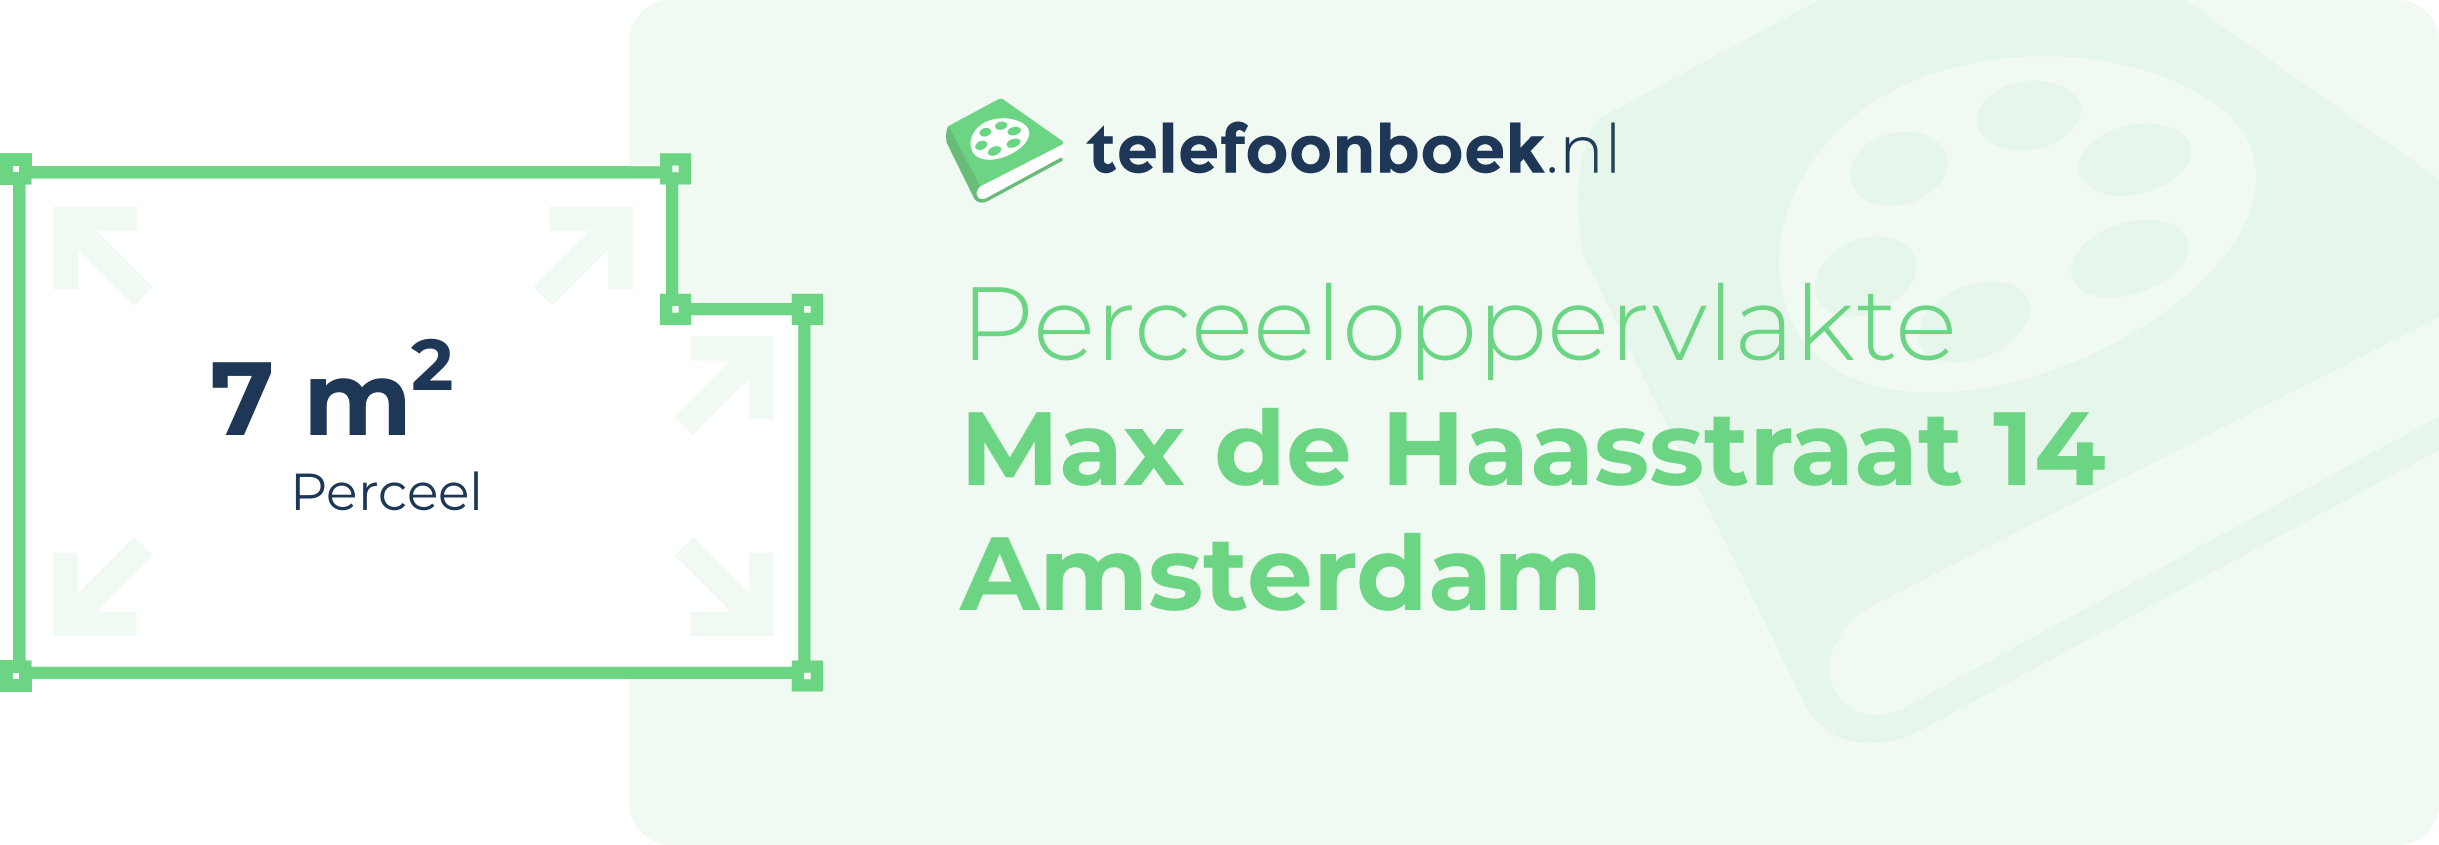 Perceeloppervlakte Max De Haasstraat 14 Amsterdam